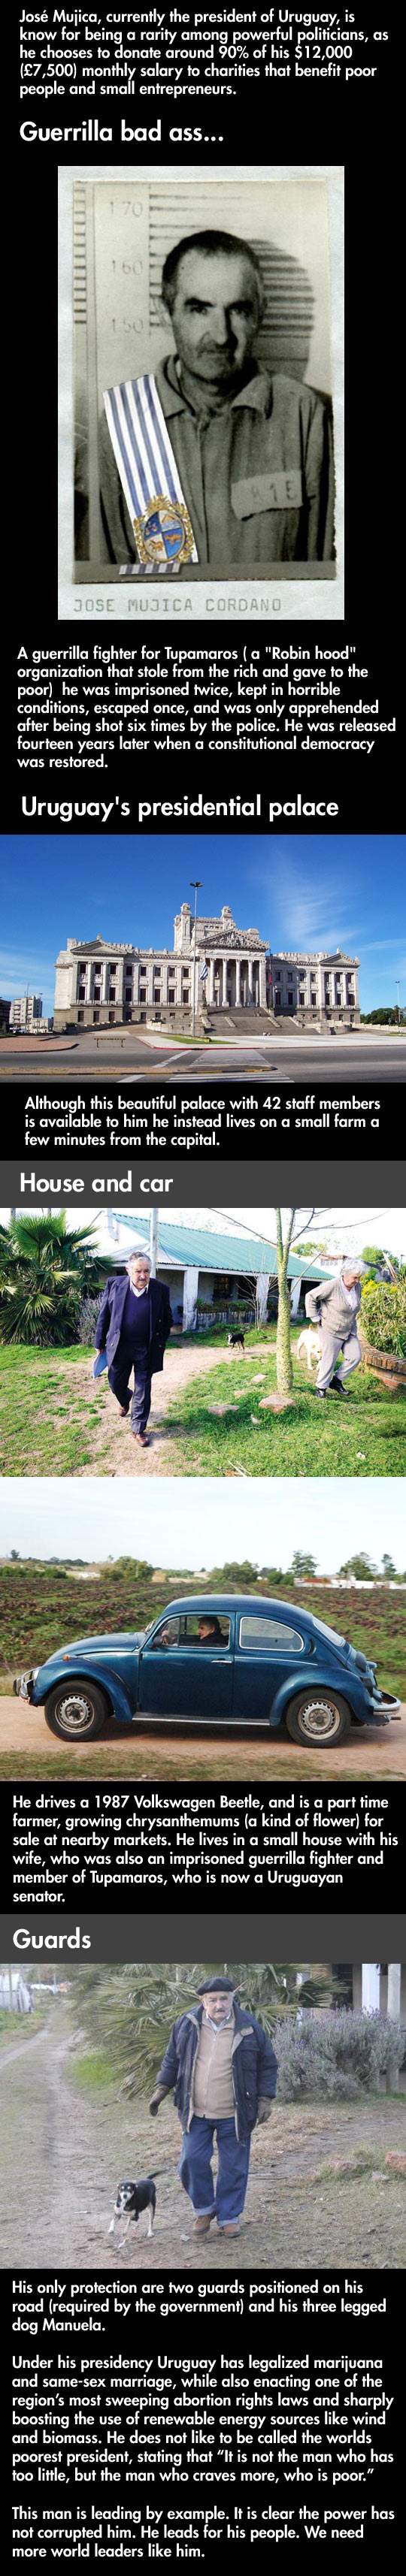 Jose Mujica, More than a President